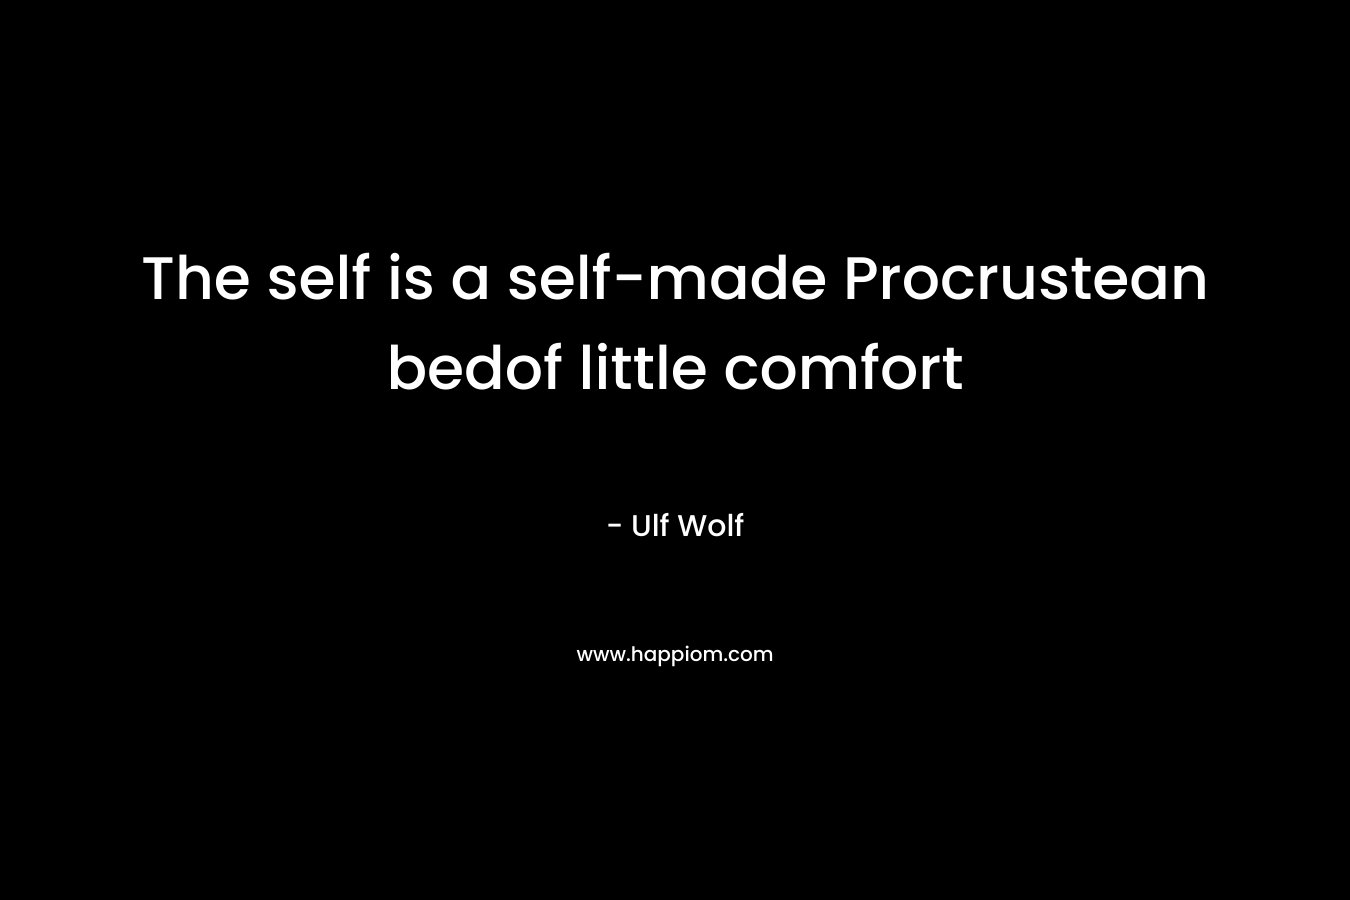 The self is a self-made Procrustean bedof little comfort